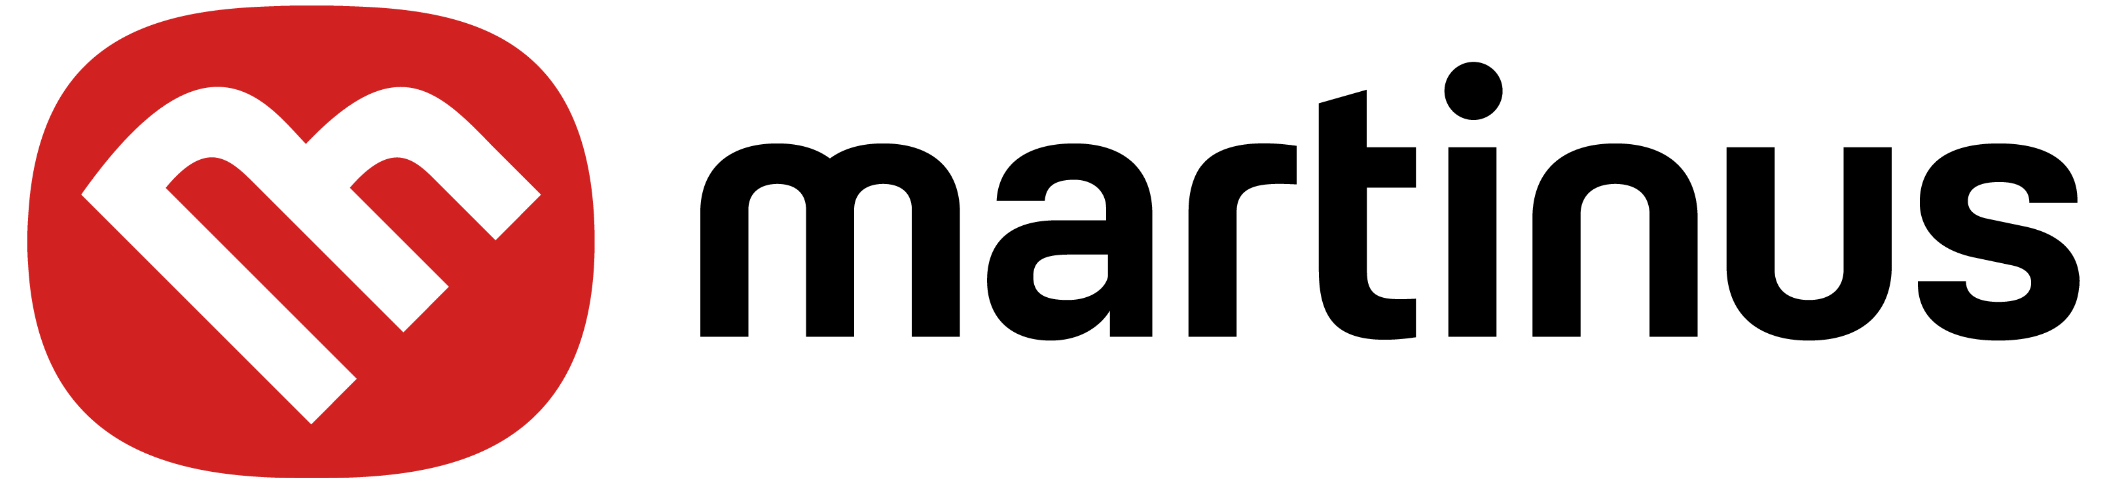 Výsledek obrázku pro logo martinus